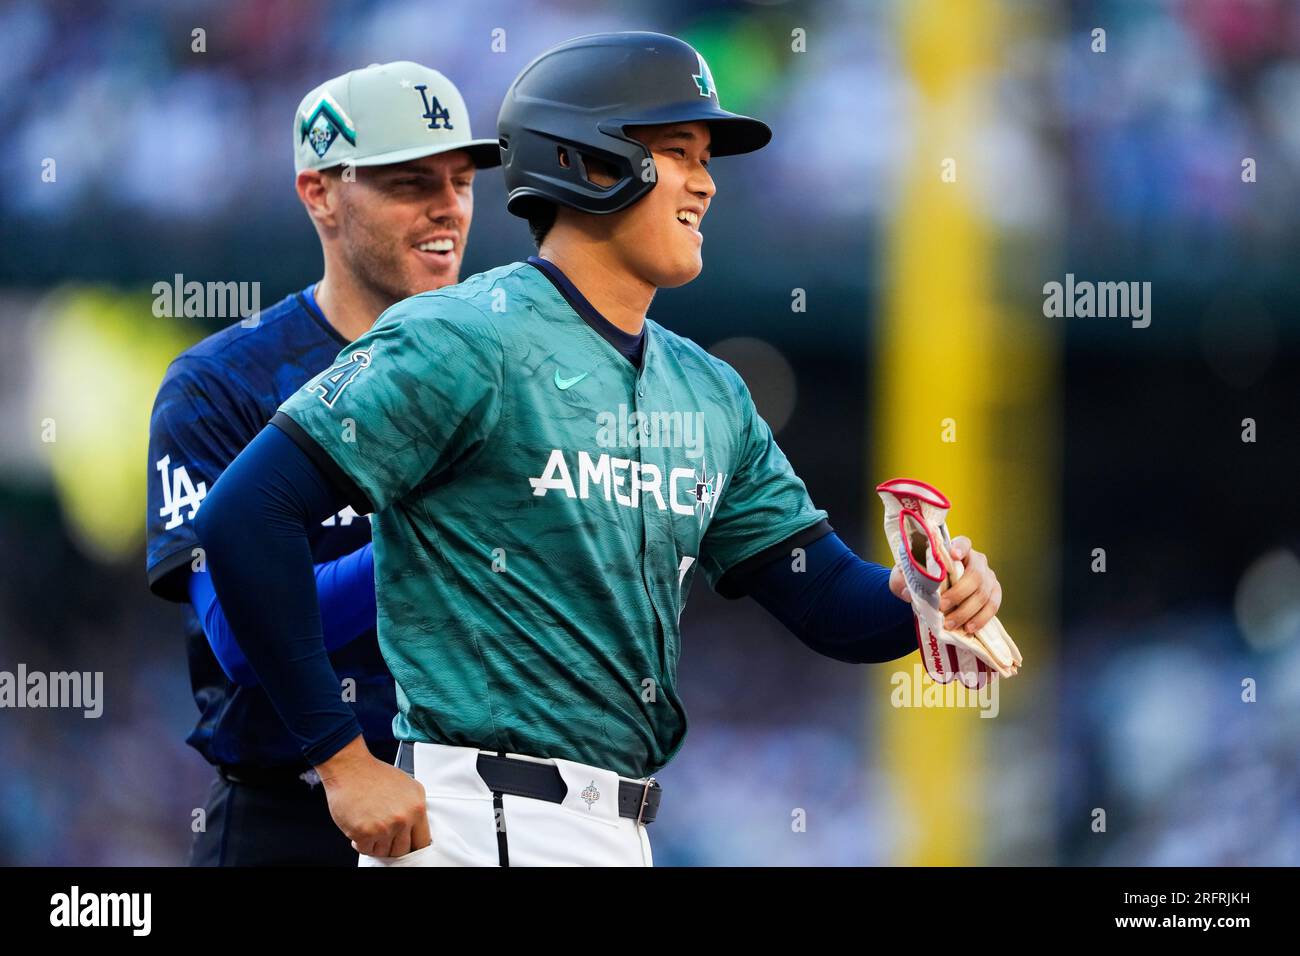 In Photos: MLB stars including Shohei Ohtani, Freddie Freeman, and